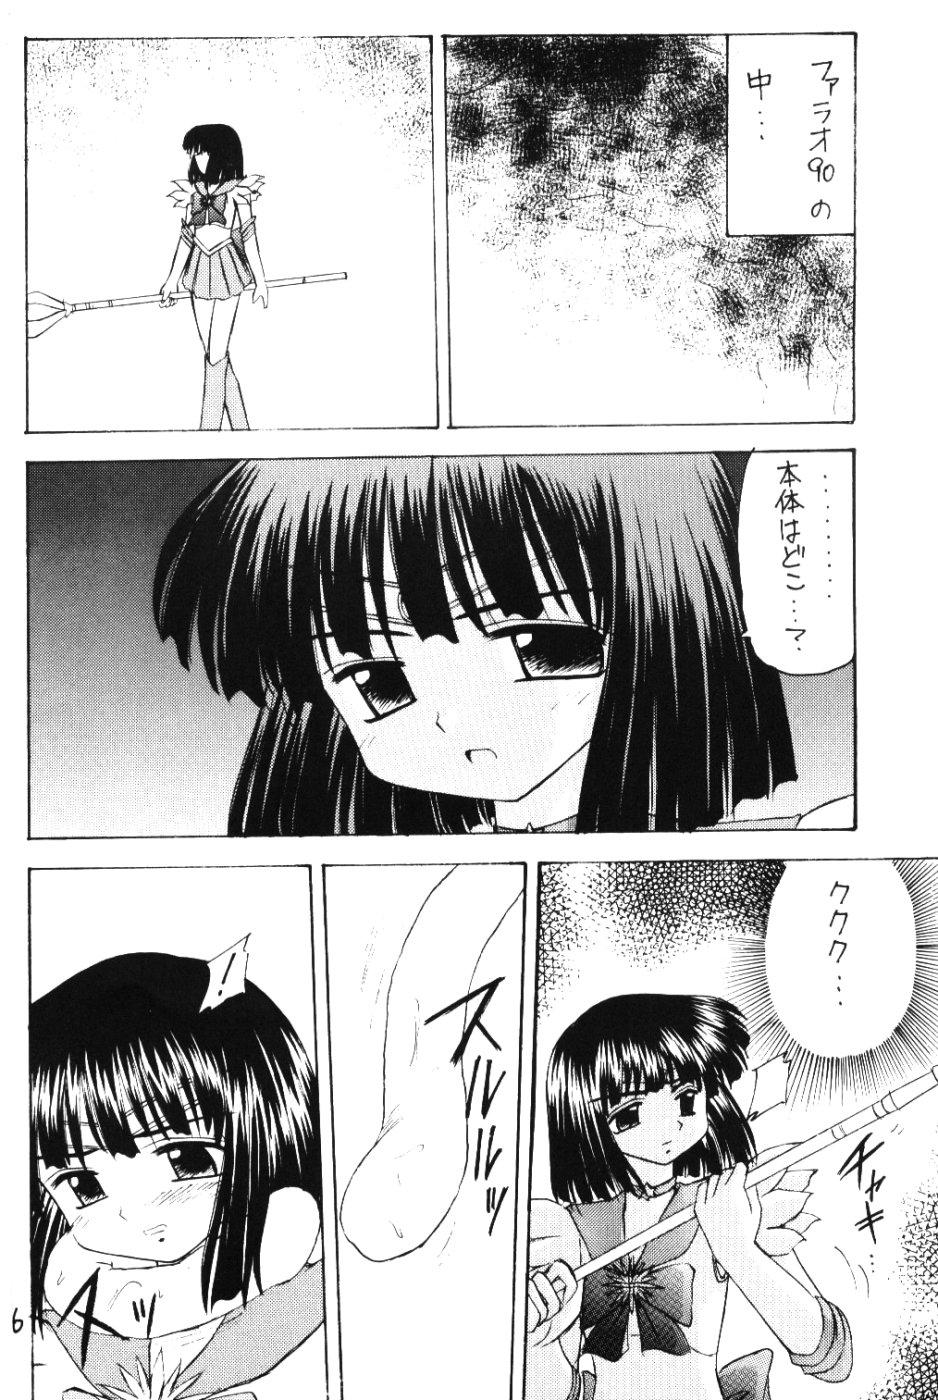 Seduction Porn Hotaru VI - Sailor moon Coroa - Page 5